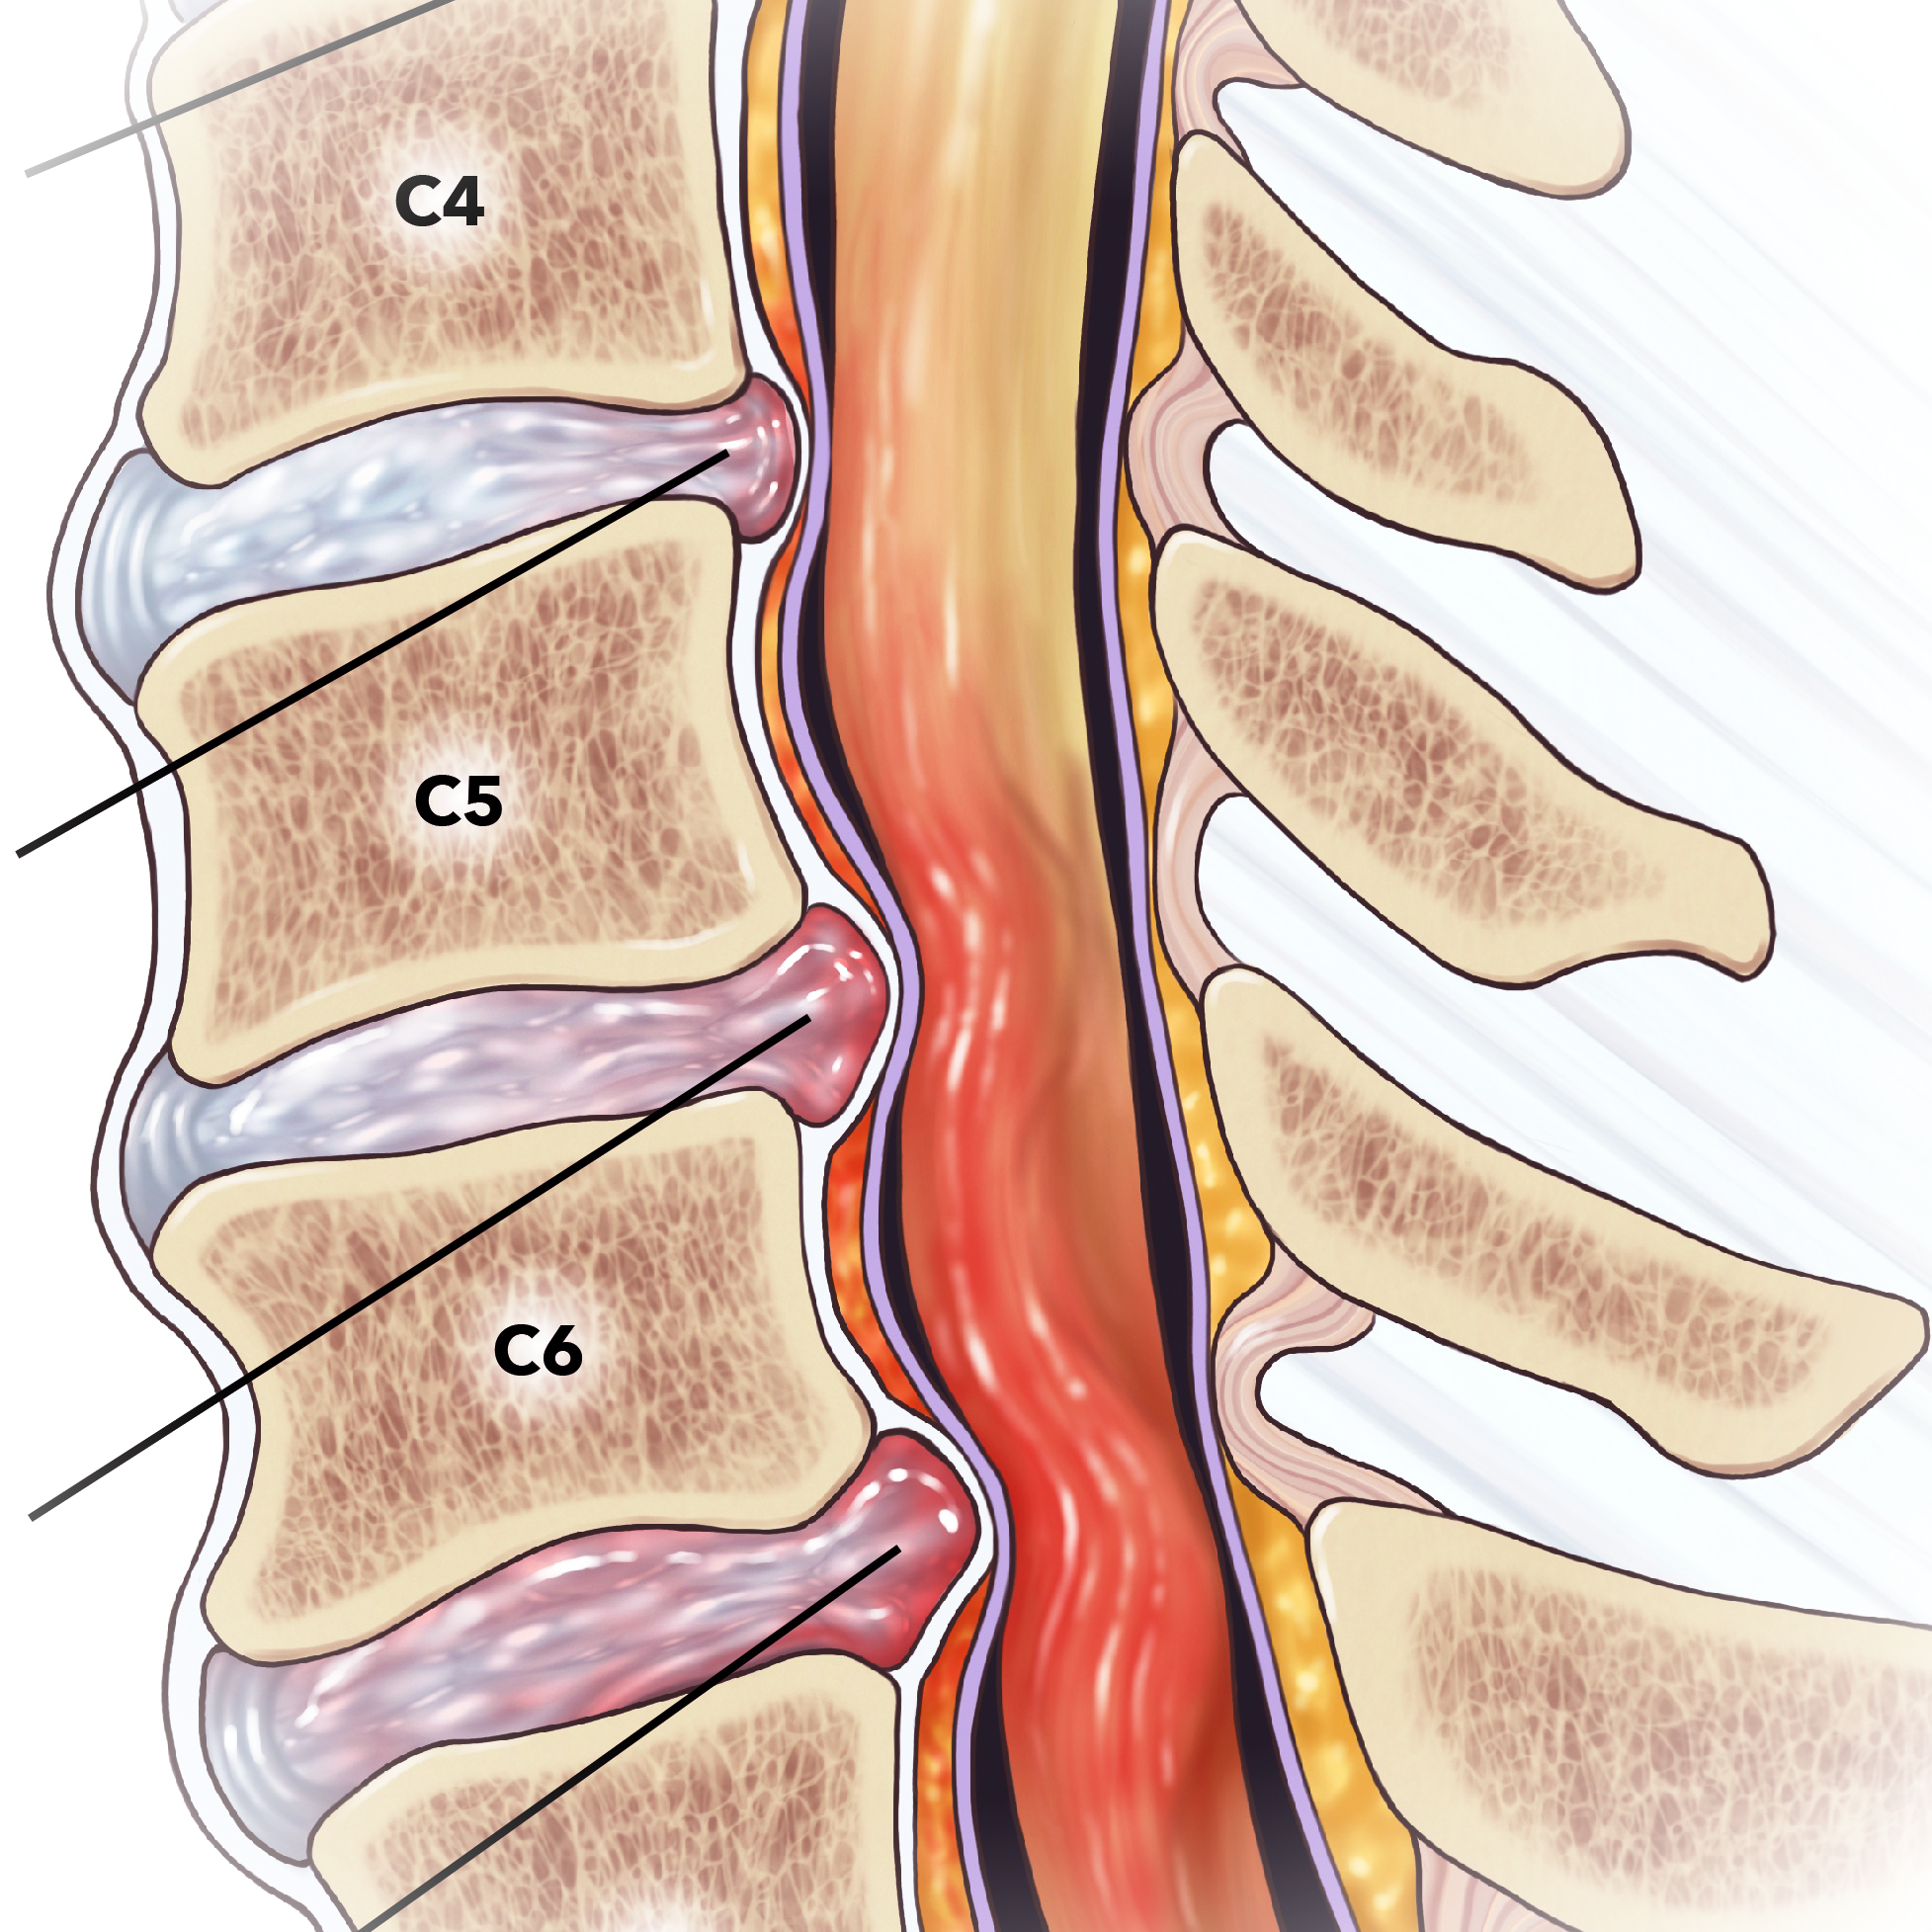 An illustration of a cervical fracture